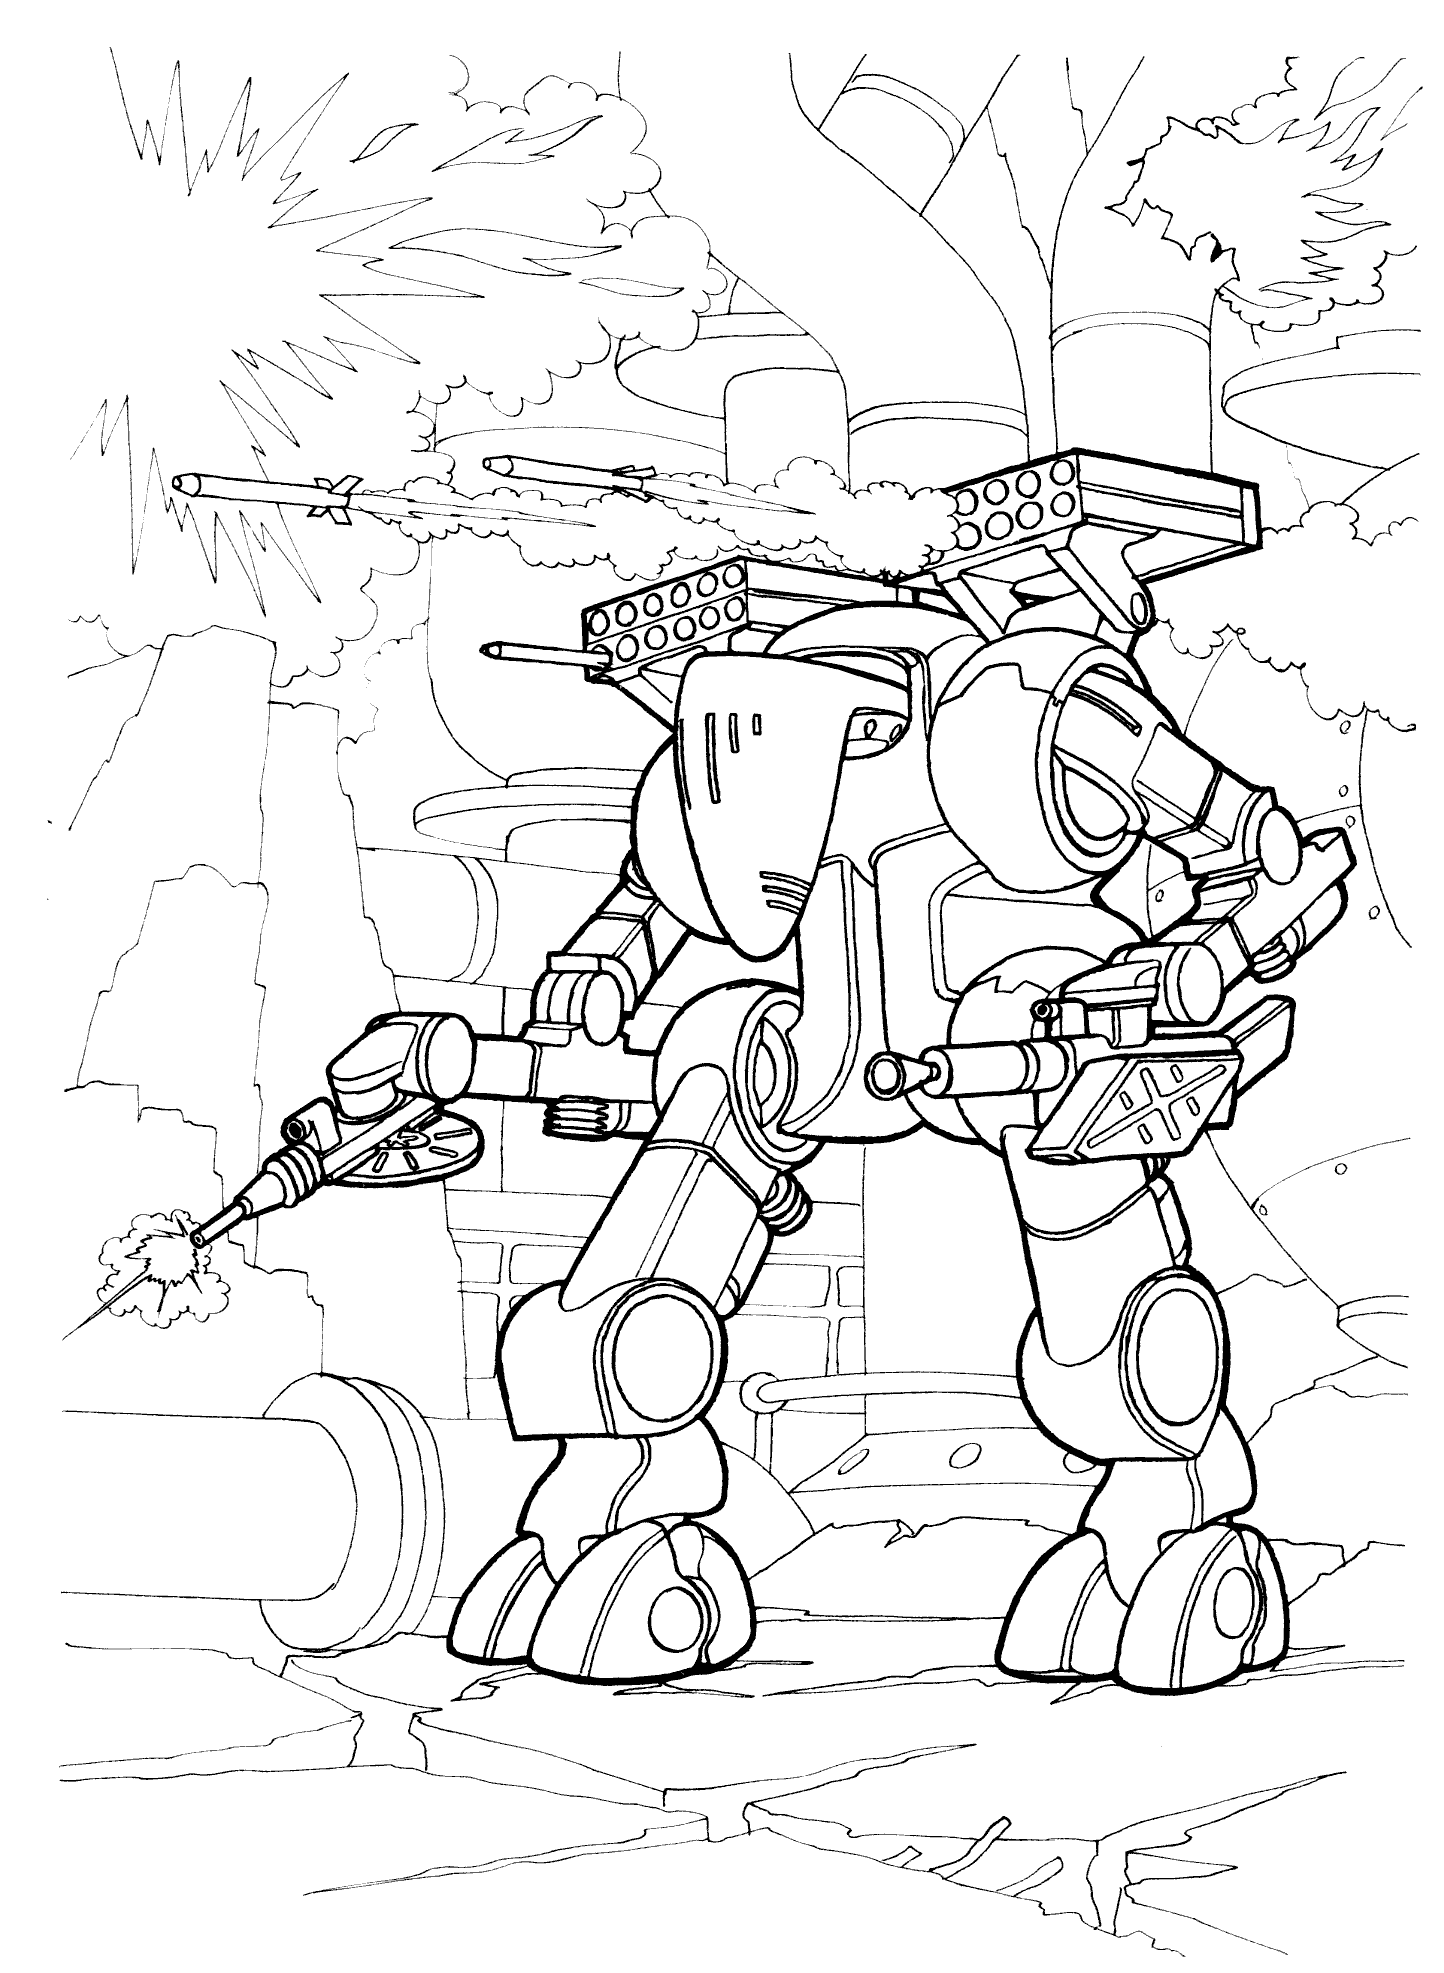 Coloring page - Big War Robot